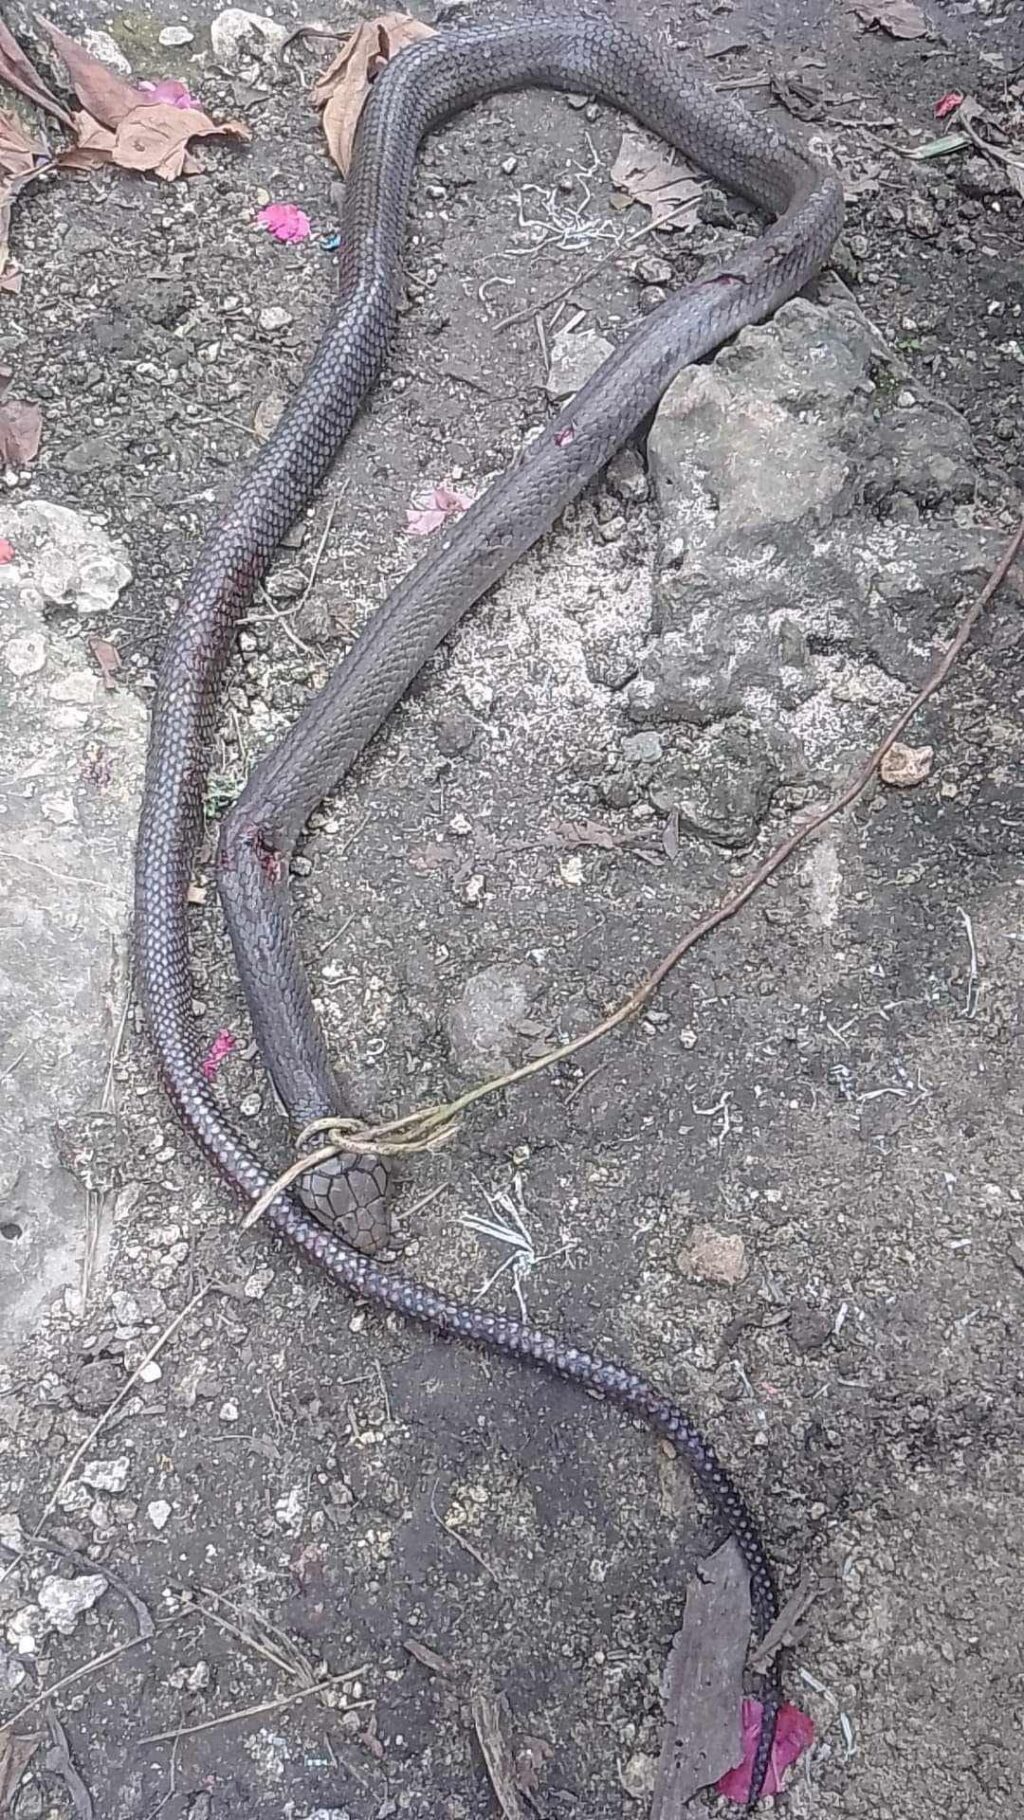 King cobra or banakon spotted in Badian town last December 29.